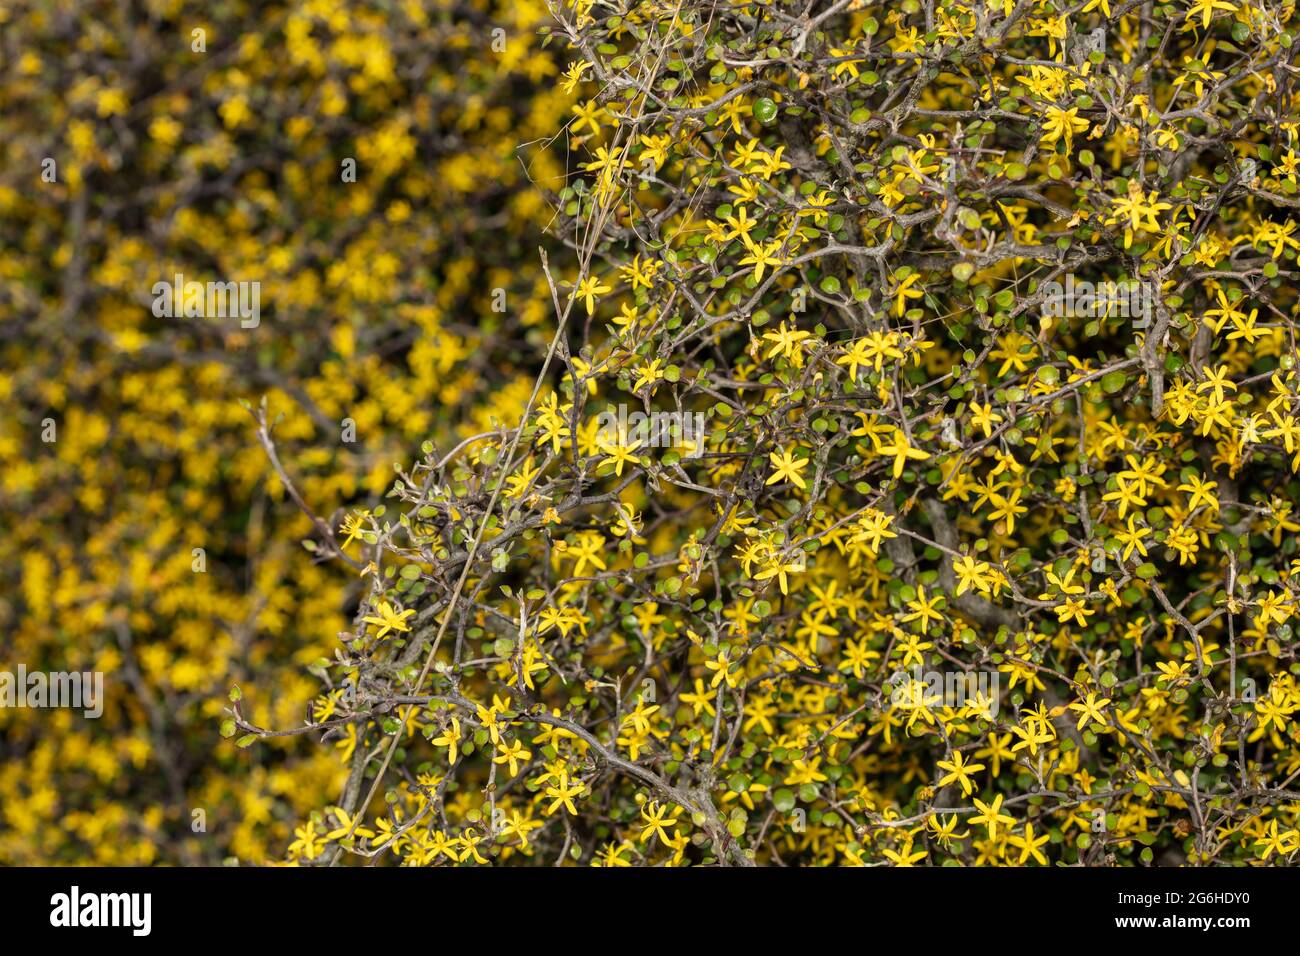 Corokia cotoneaster, wire-netting bush, close up natural plant portrait Stock Photo